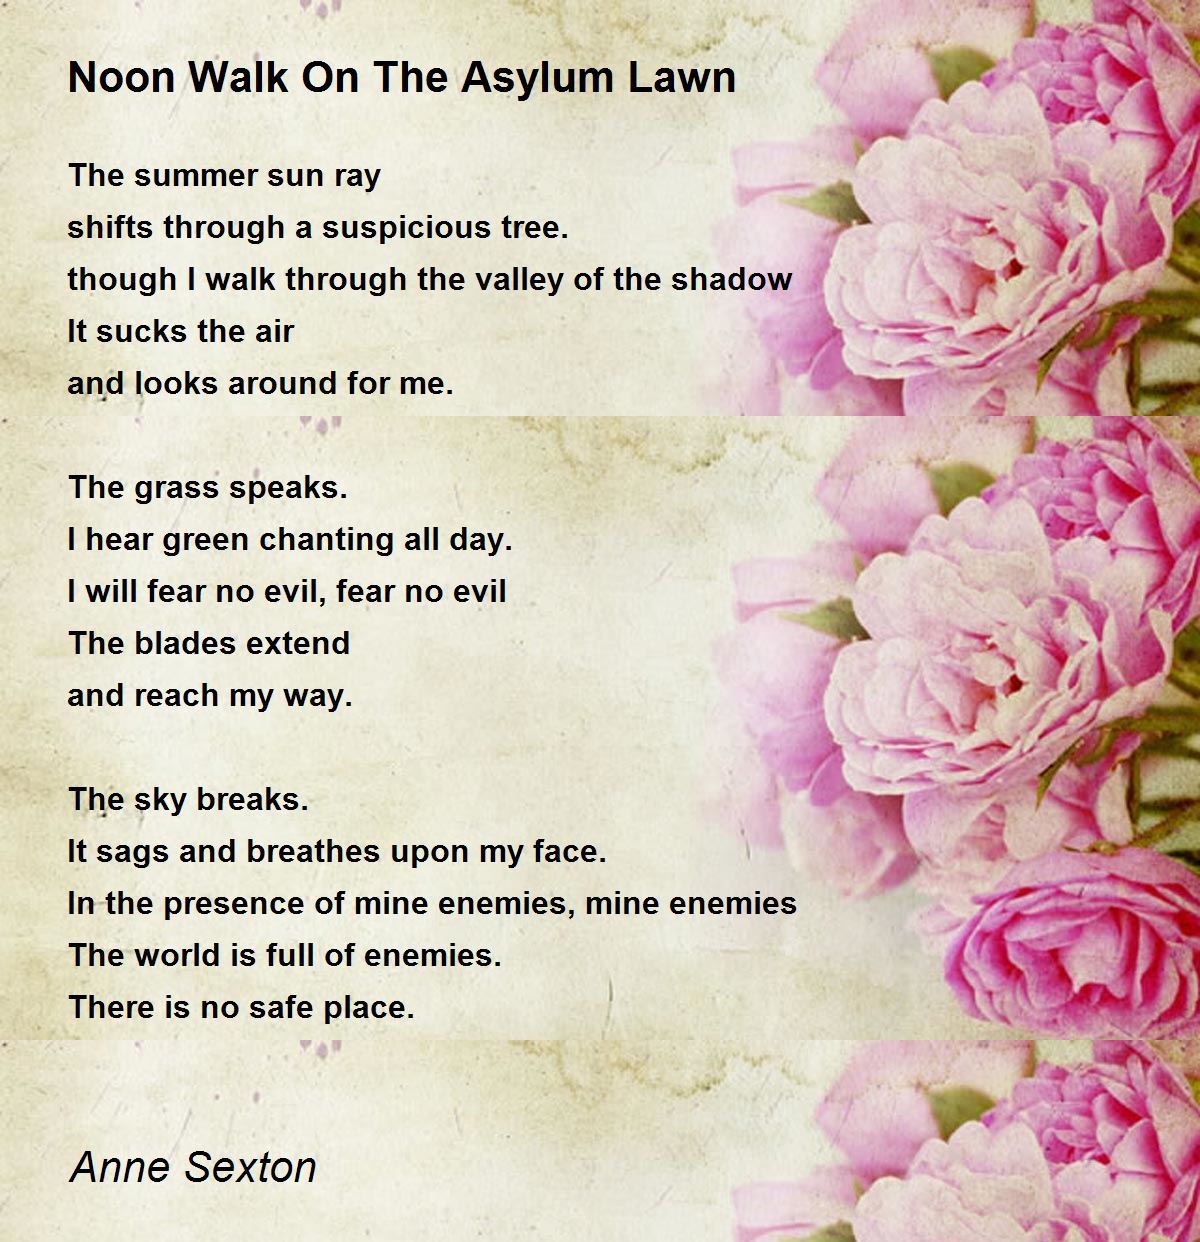 Noon Walk On The Asylum Lawn Poem by Anne Sexton - Poem Hunter